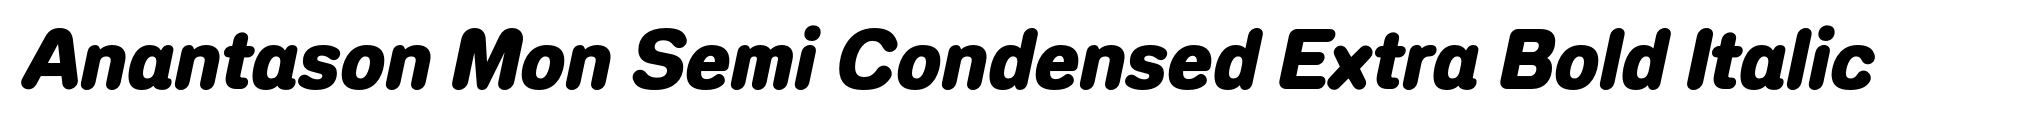 Anantason Mon Semi Condensed Extra Bold Italic image